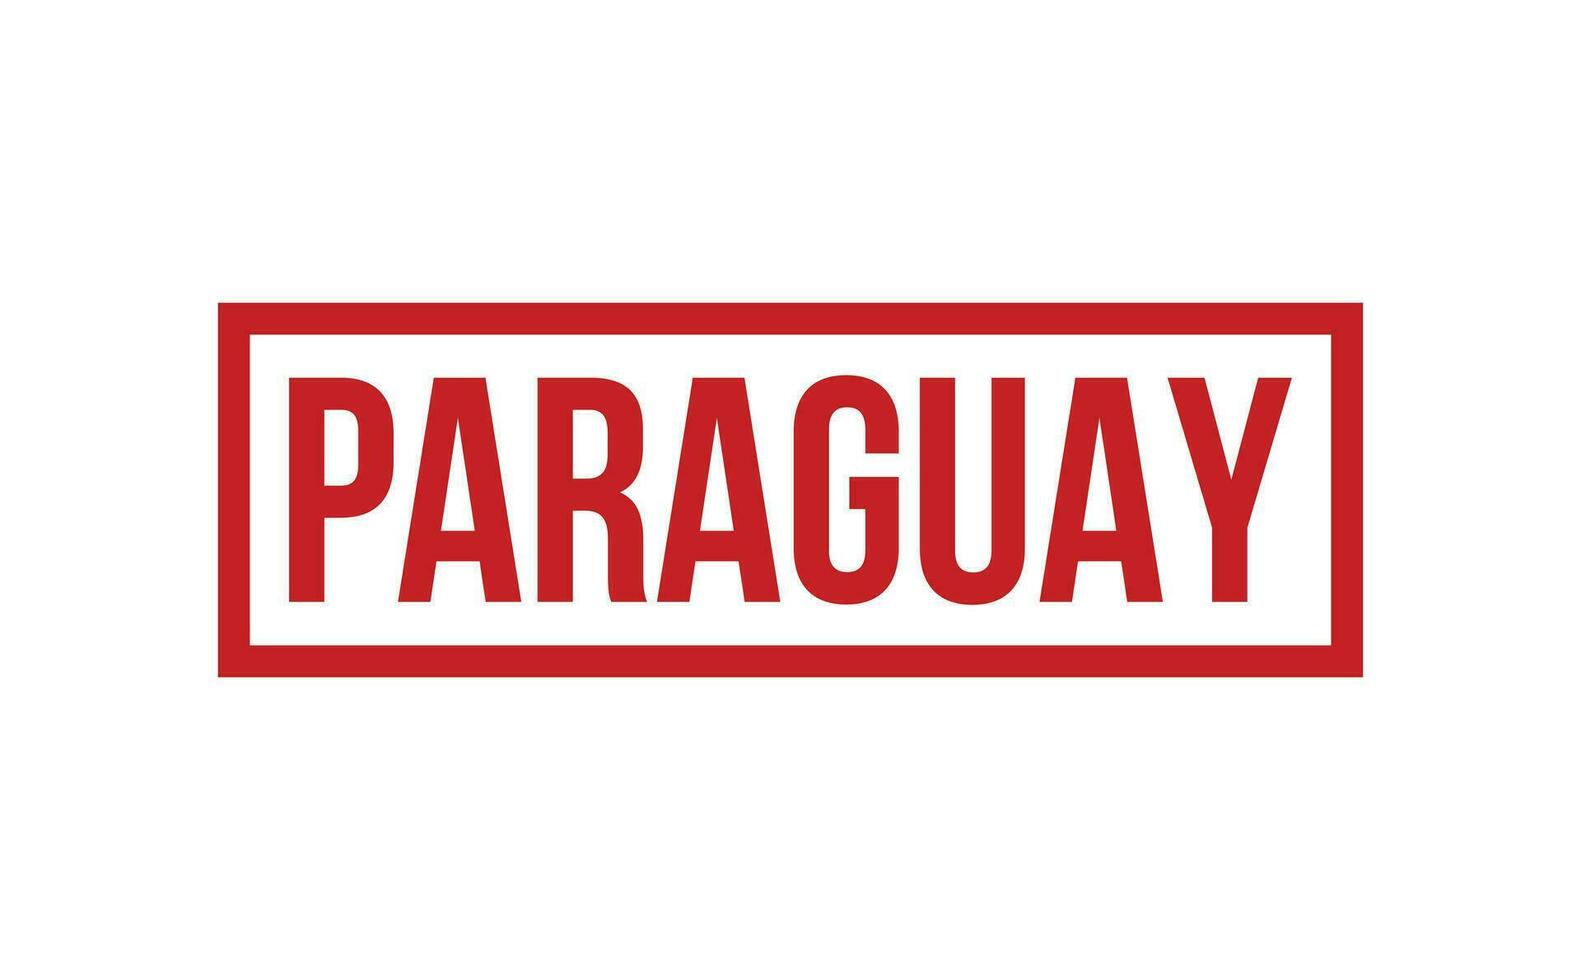 Paraguay Gummi Briefmarke Siegel Vektor